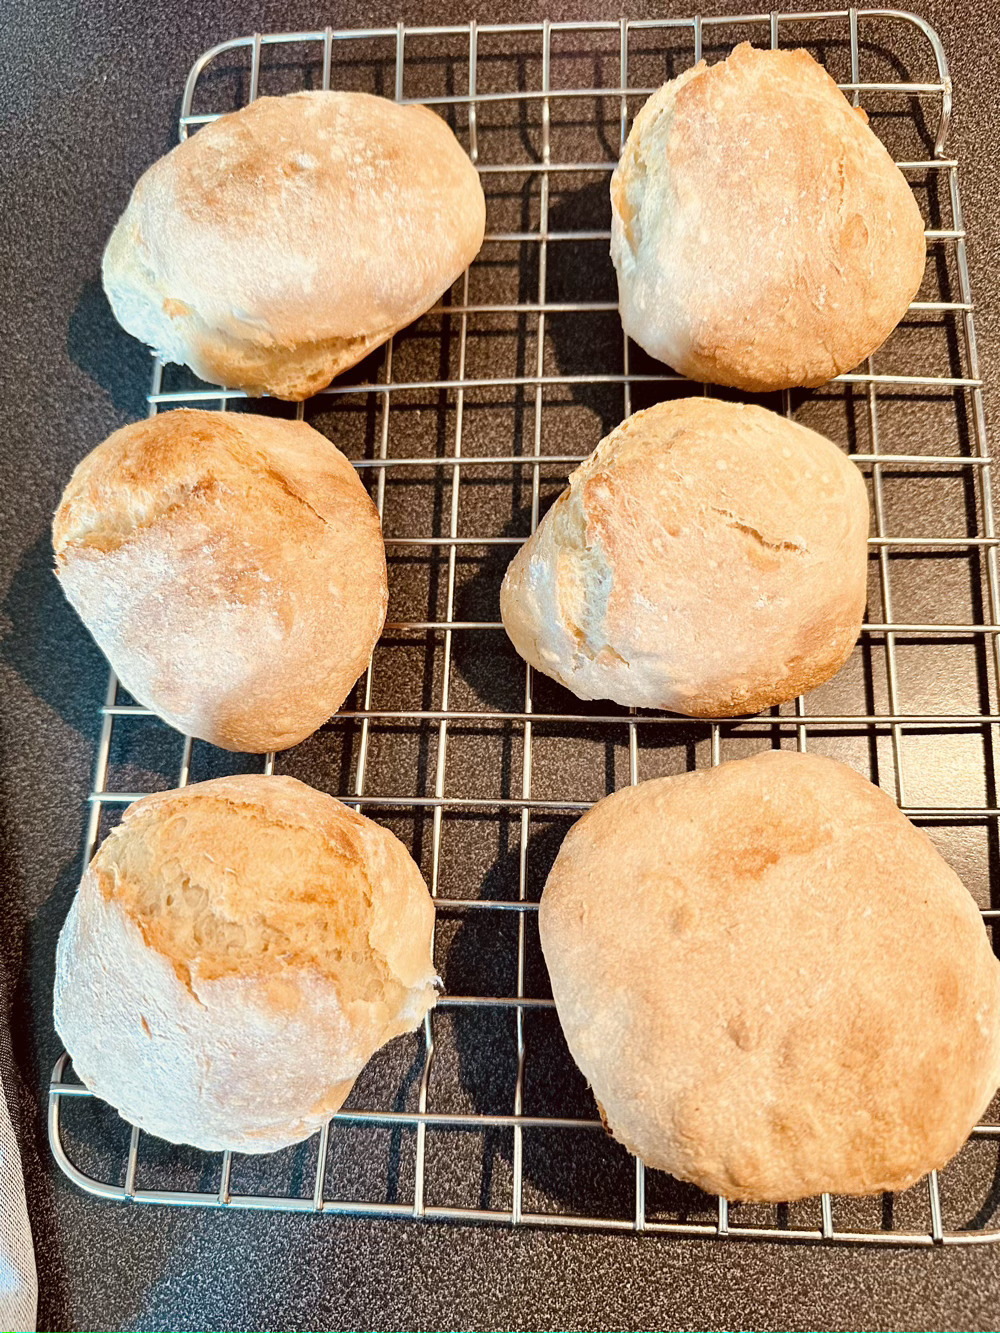 6 well risen bread rolls